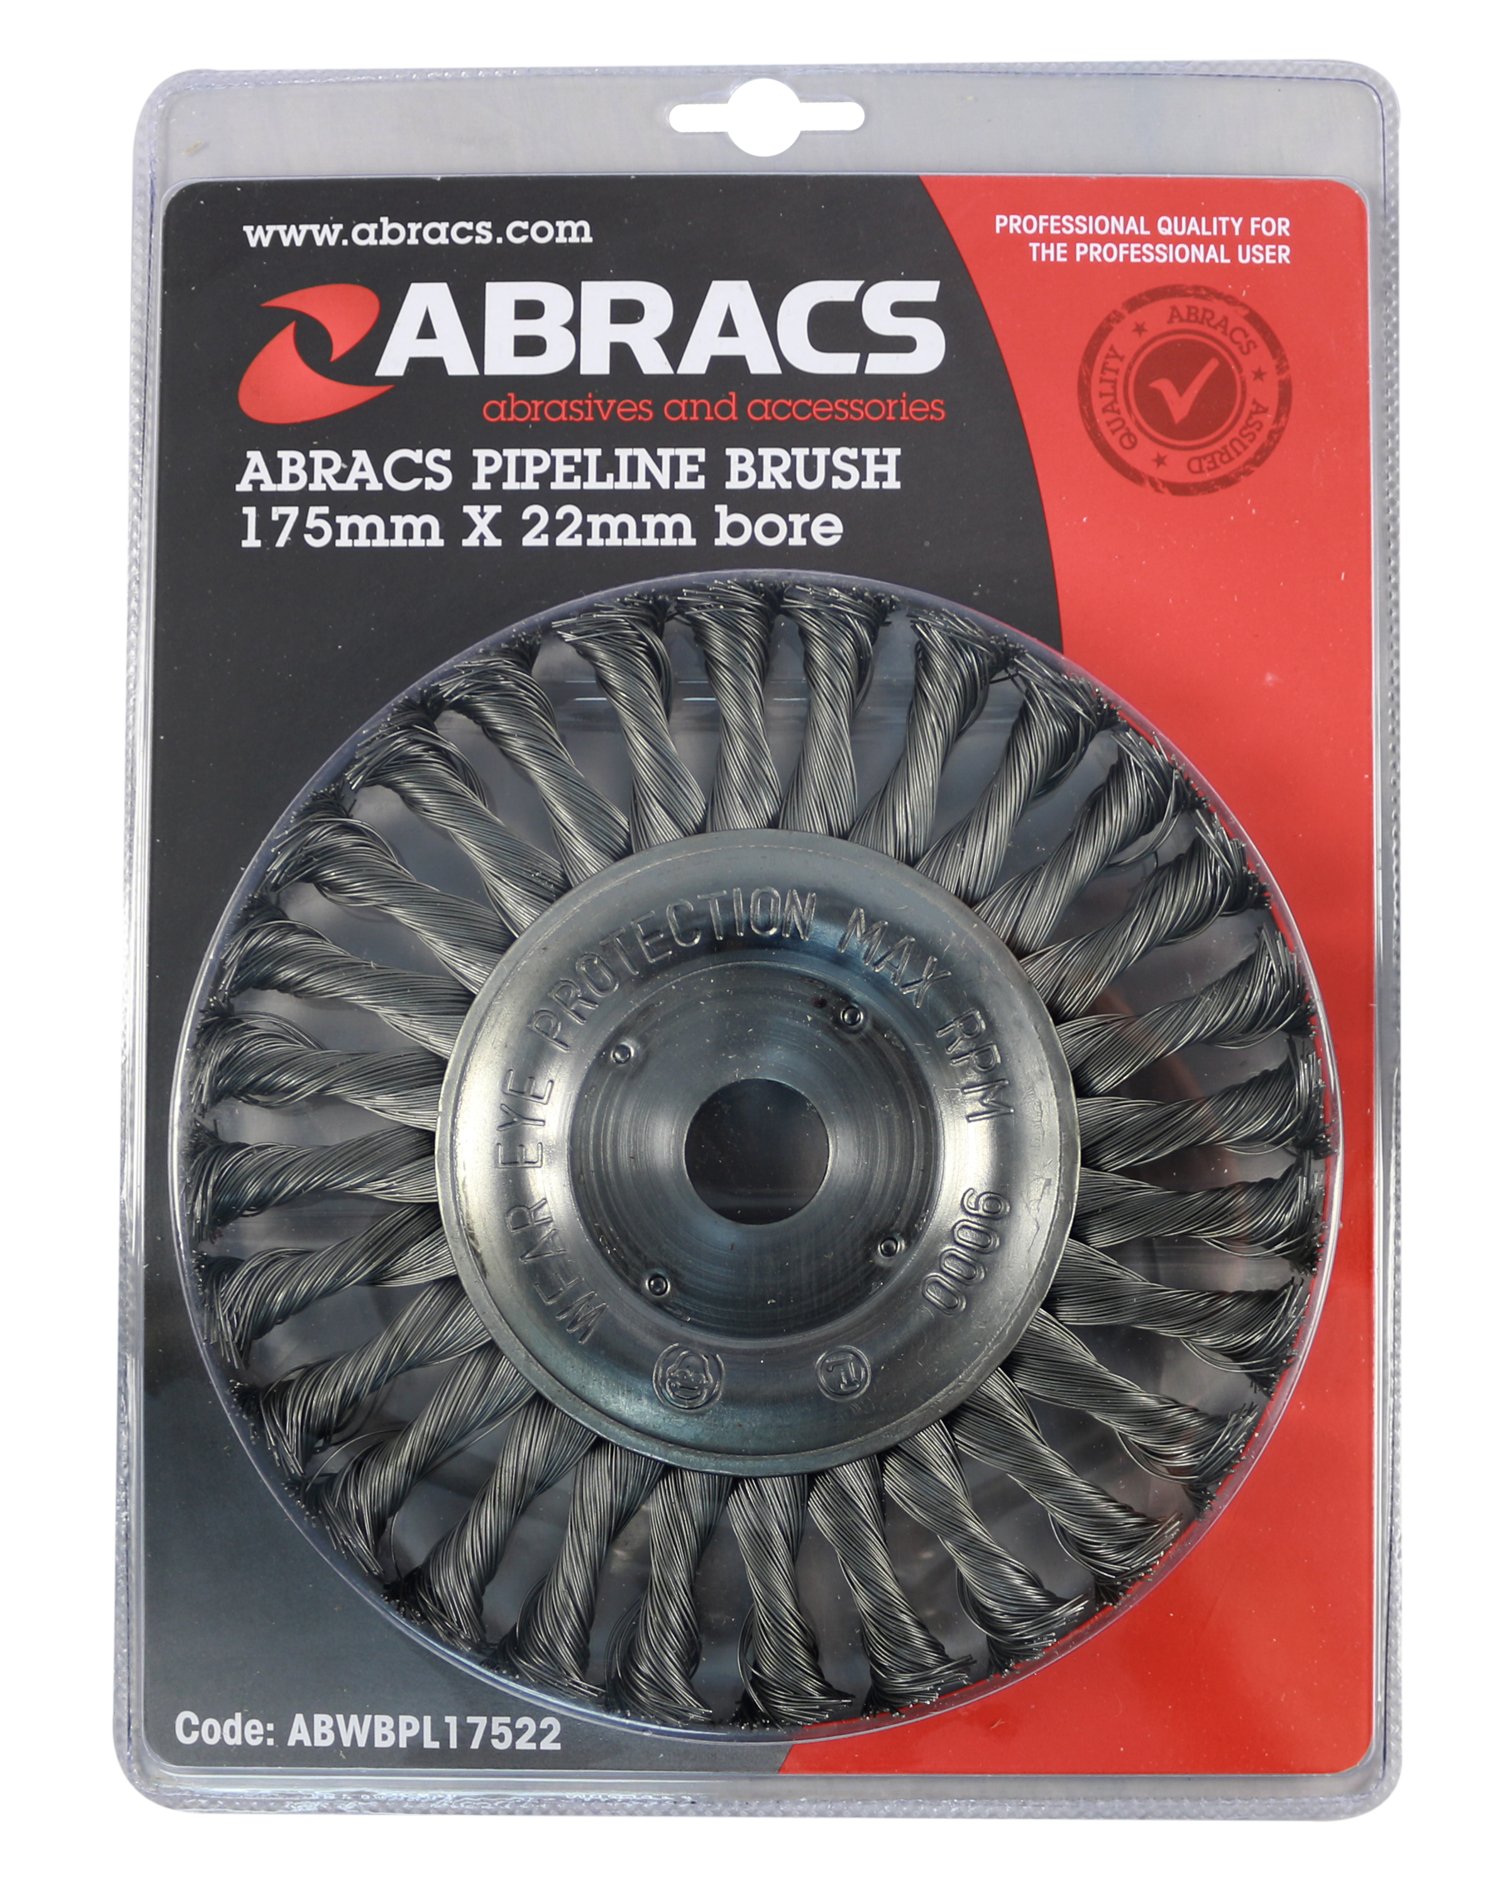 Abracs  ABRACS PIPELINE BRUSH 175mm X 22mm bore 